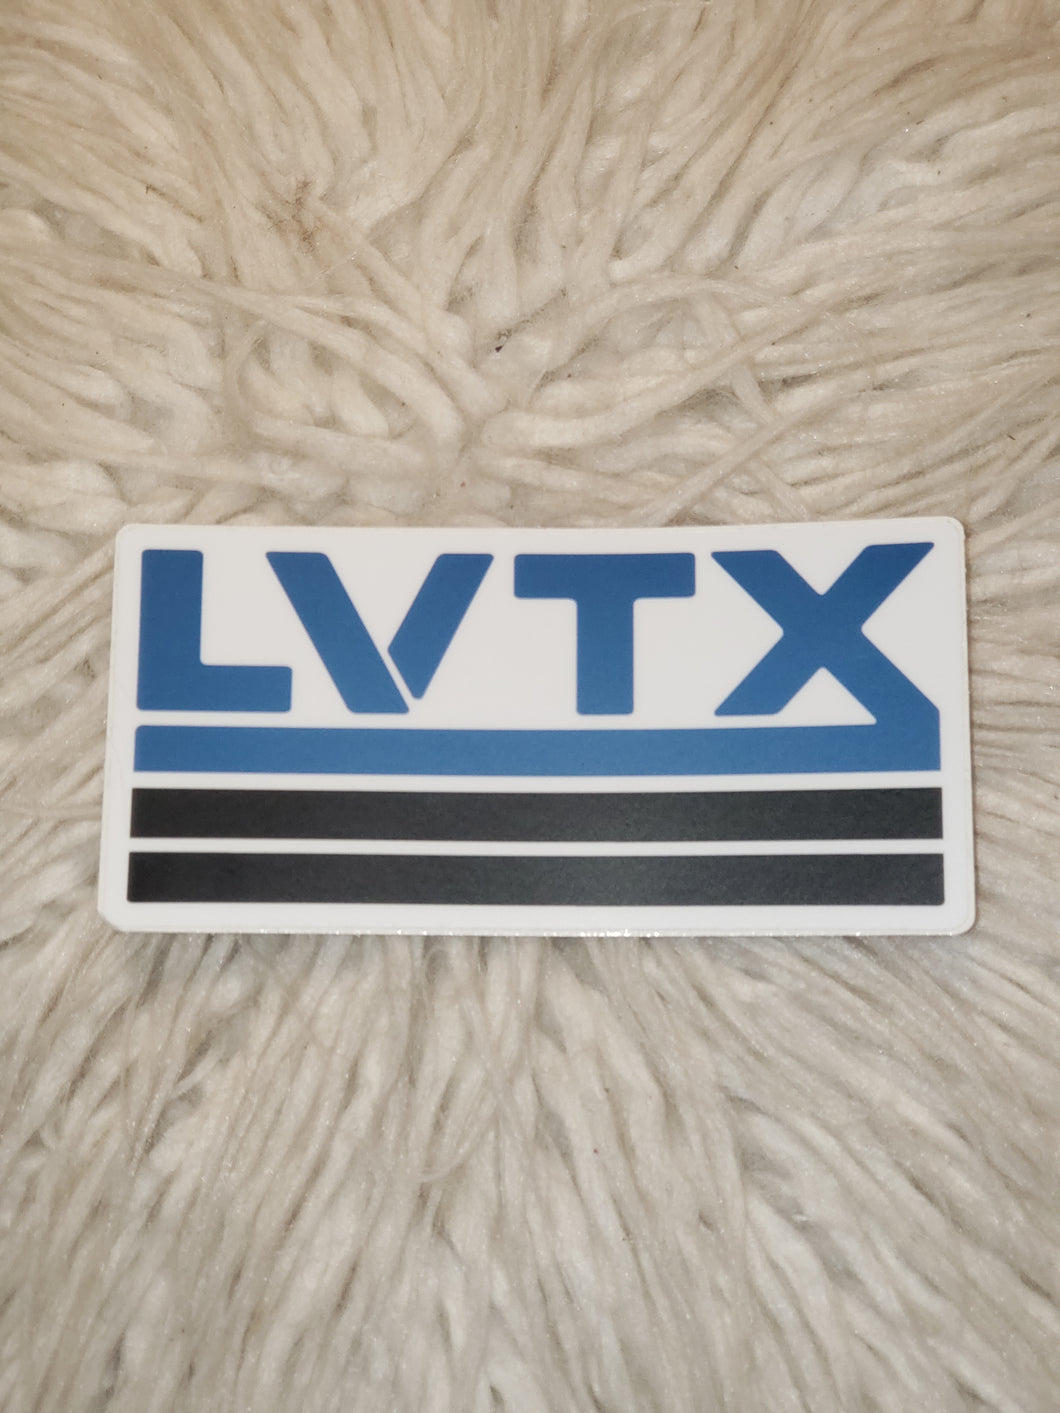 LVTX Stickers